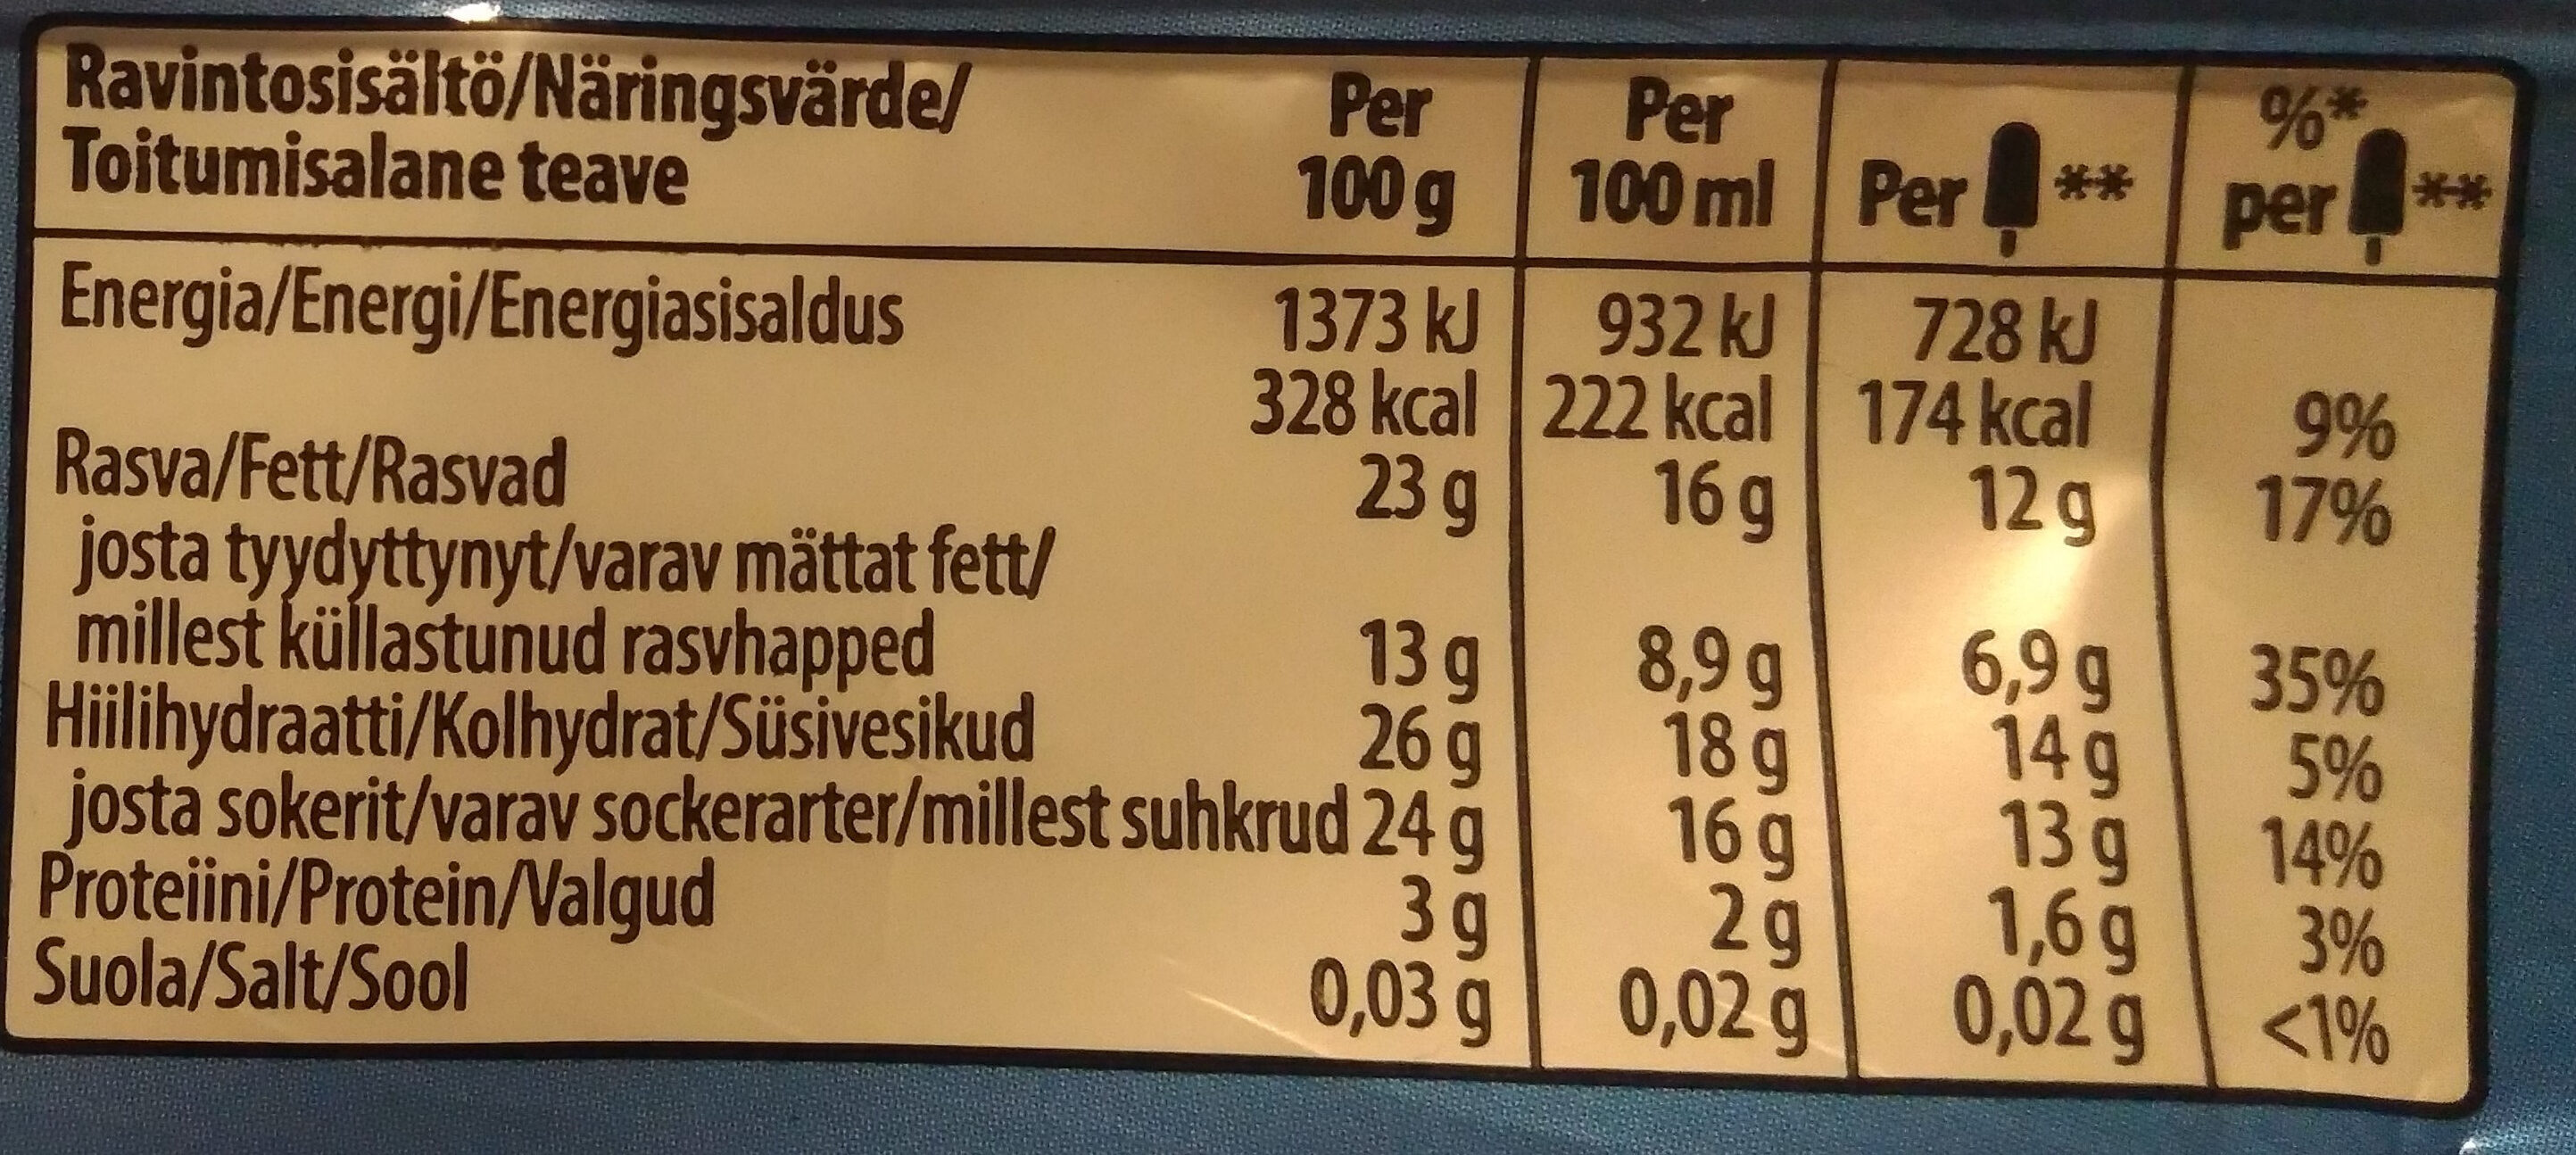 Kingis Original Vanilja - Nutrition facts - fi